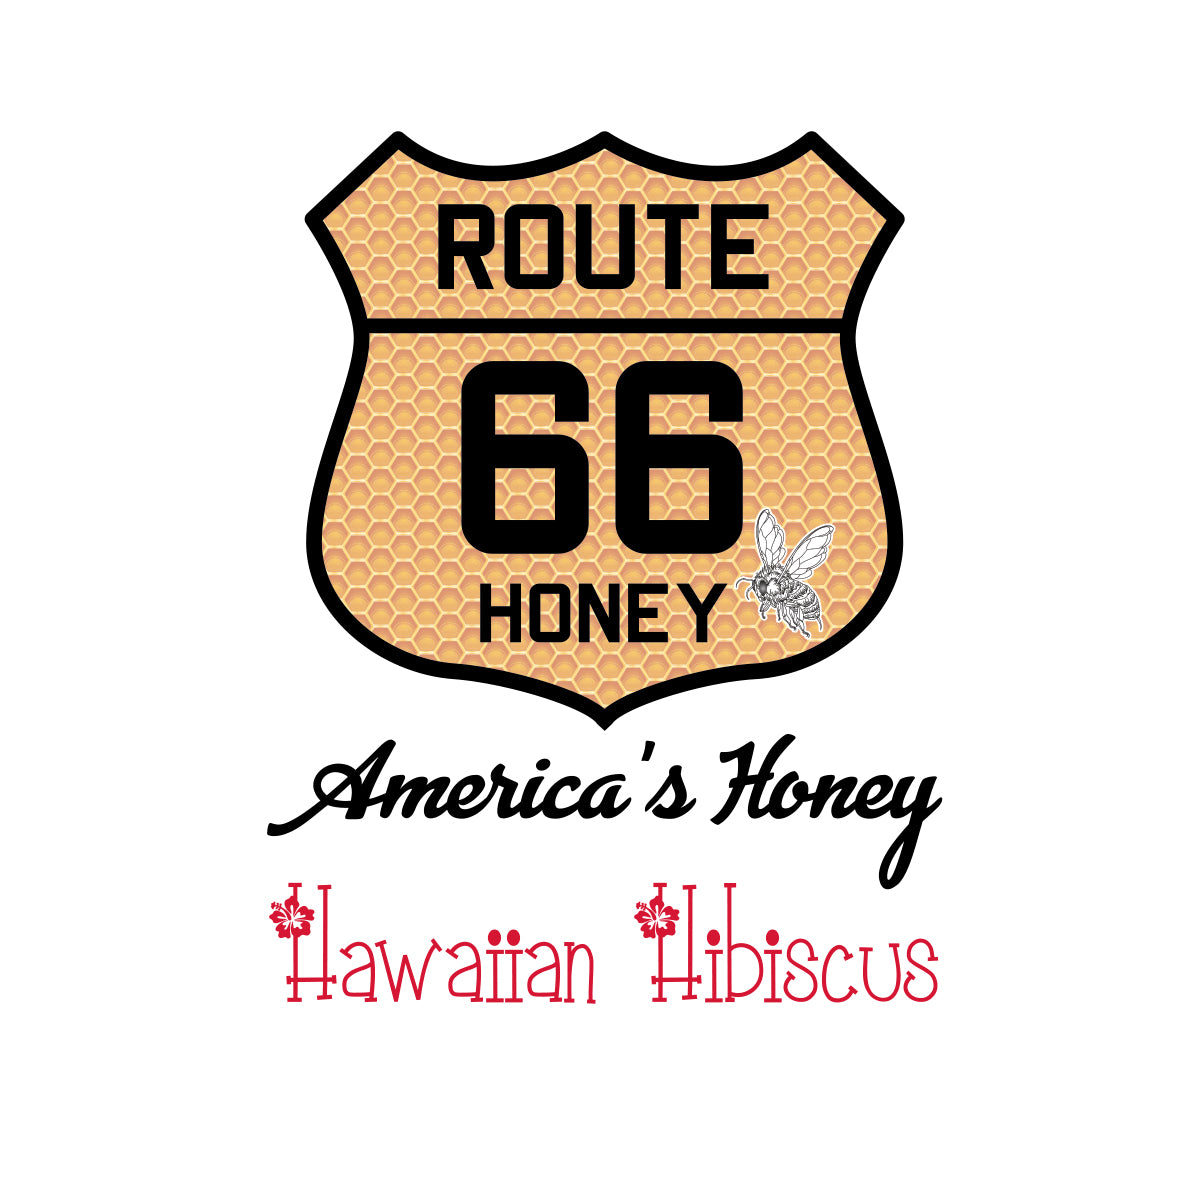 Hawaiian Hibiscus Honey